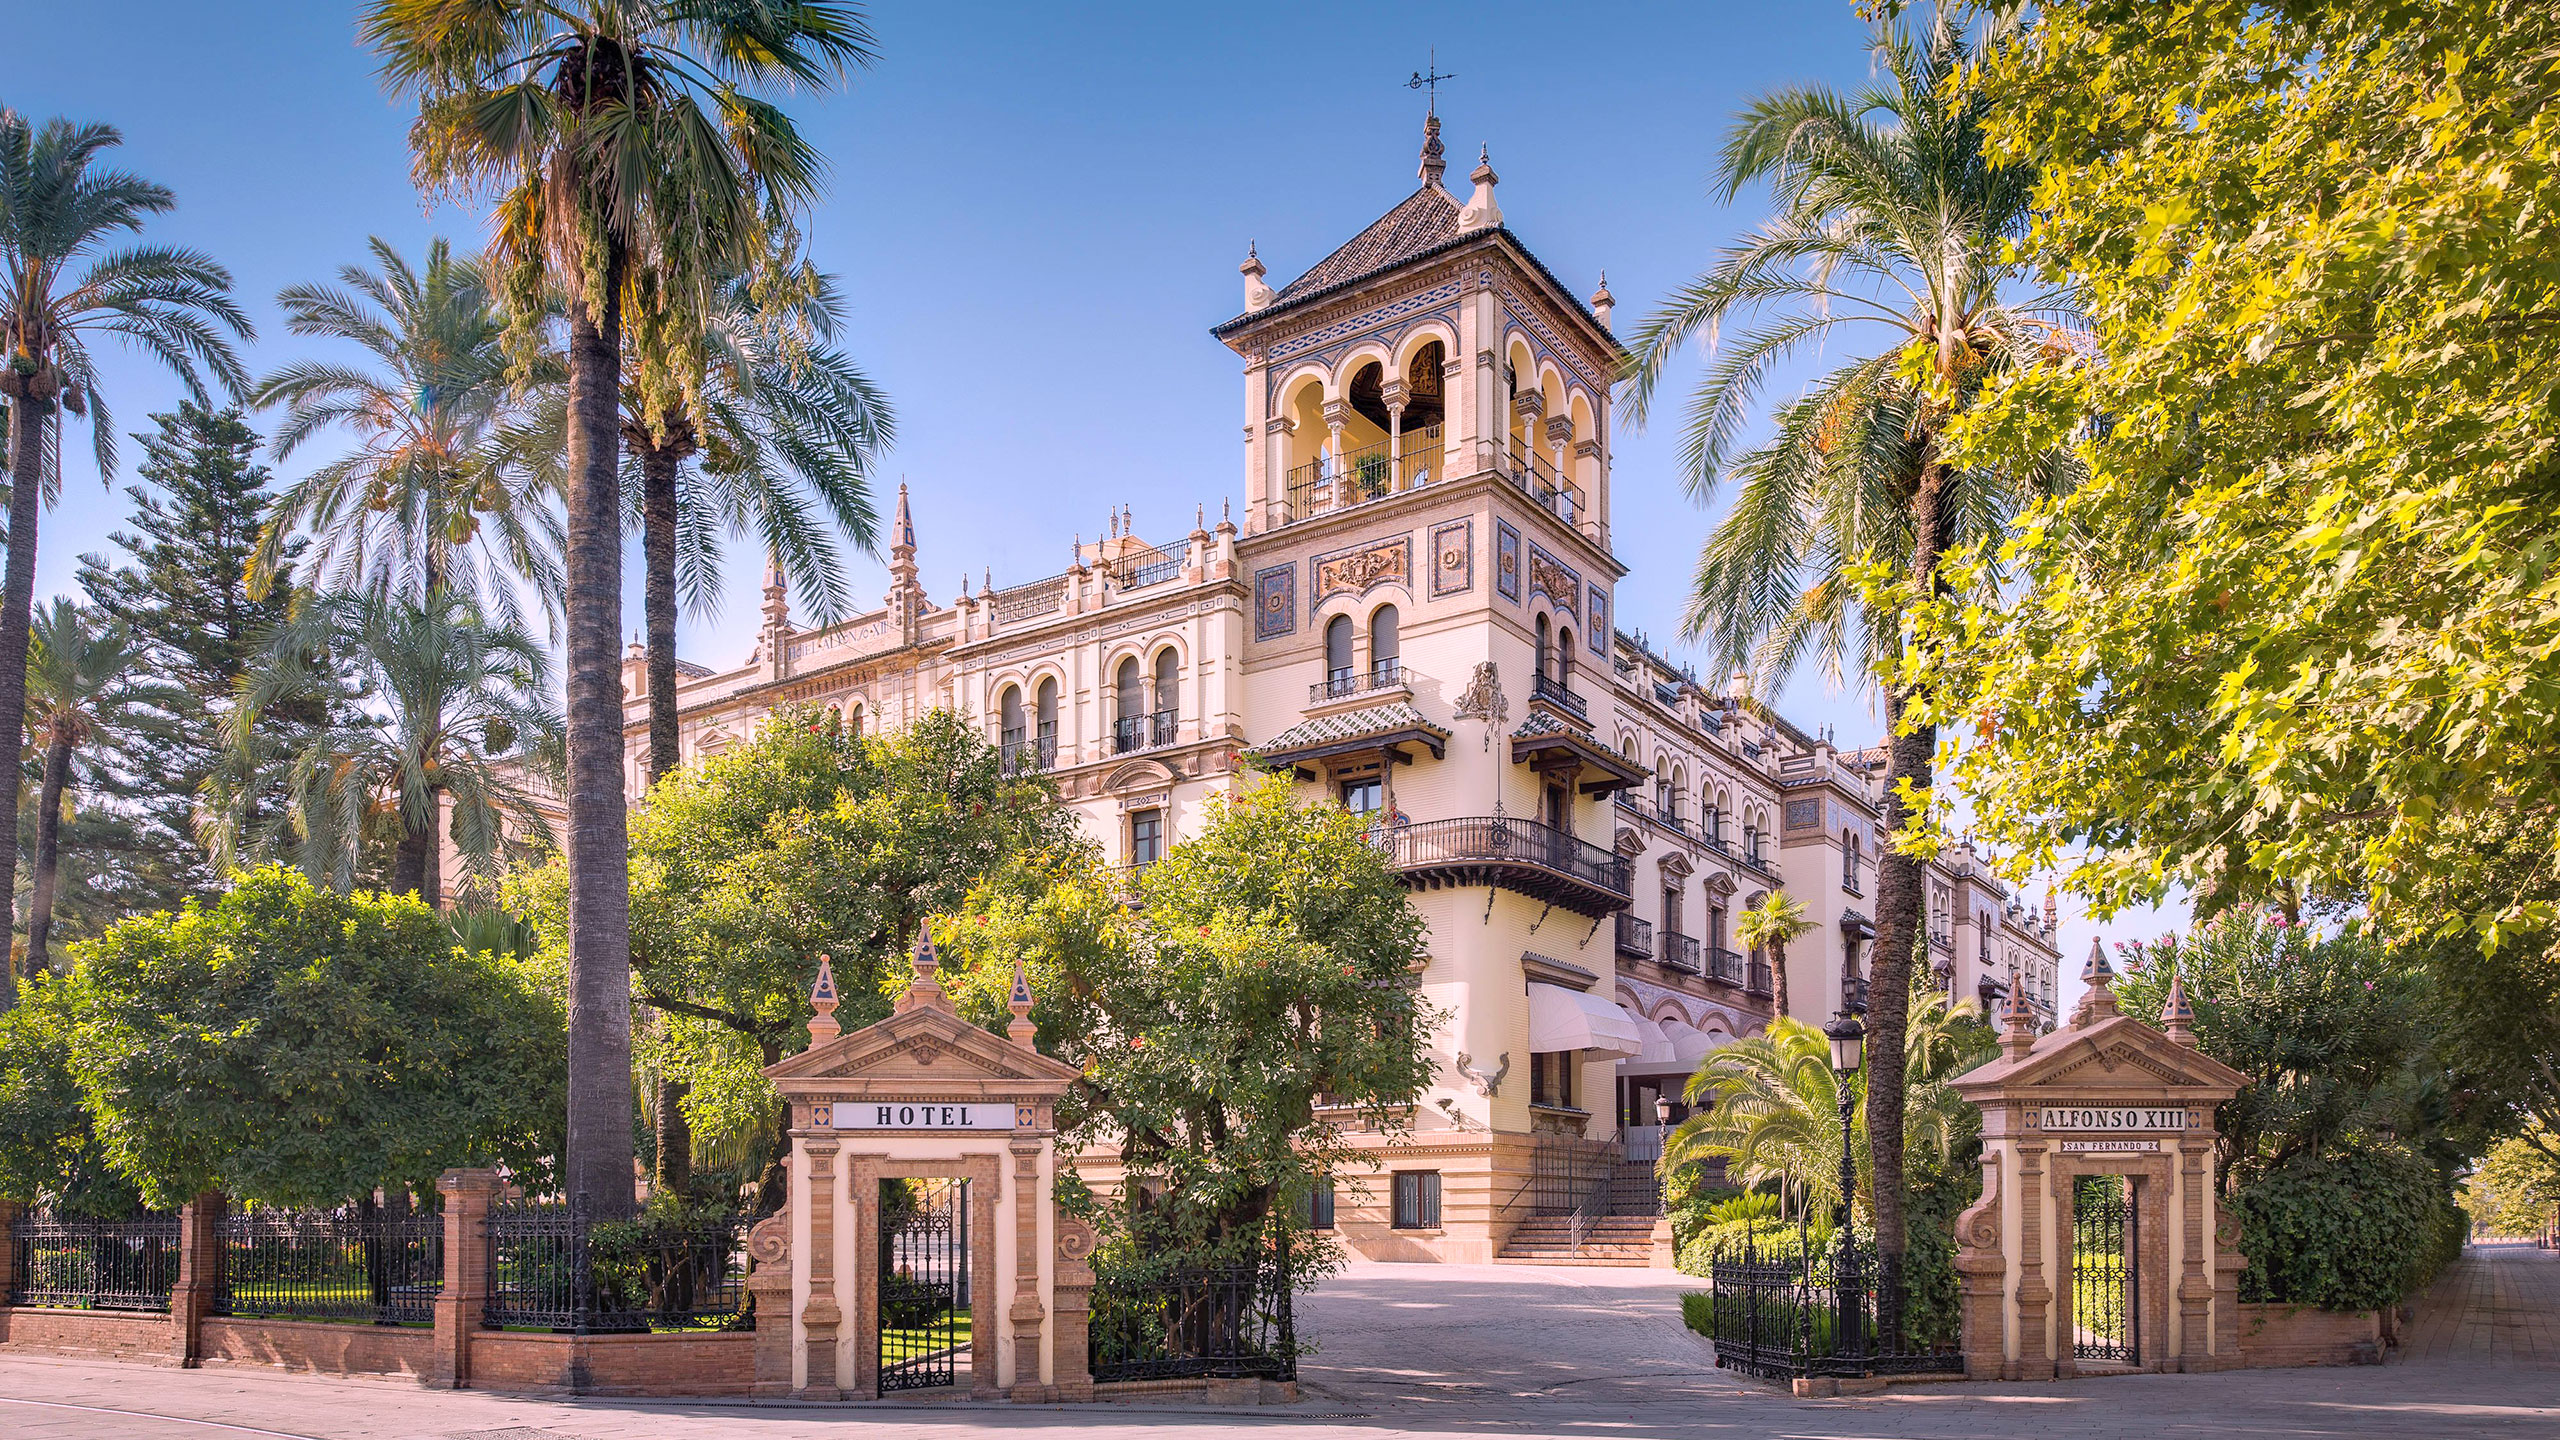 Hoteles del mundo: Hotel Alfonso XIII, Sevilla, España